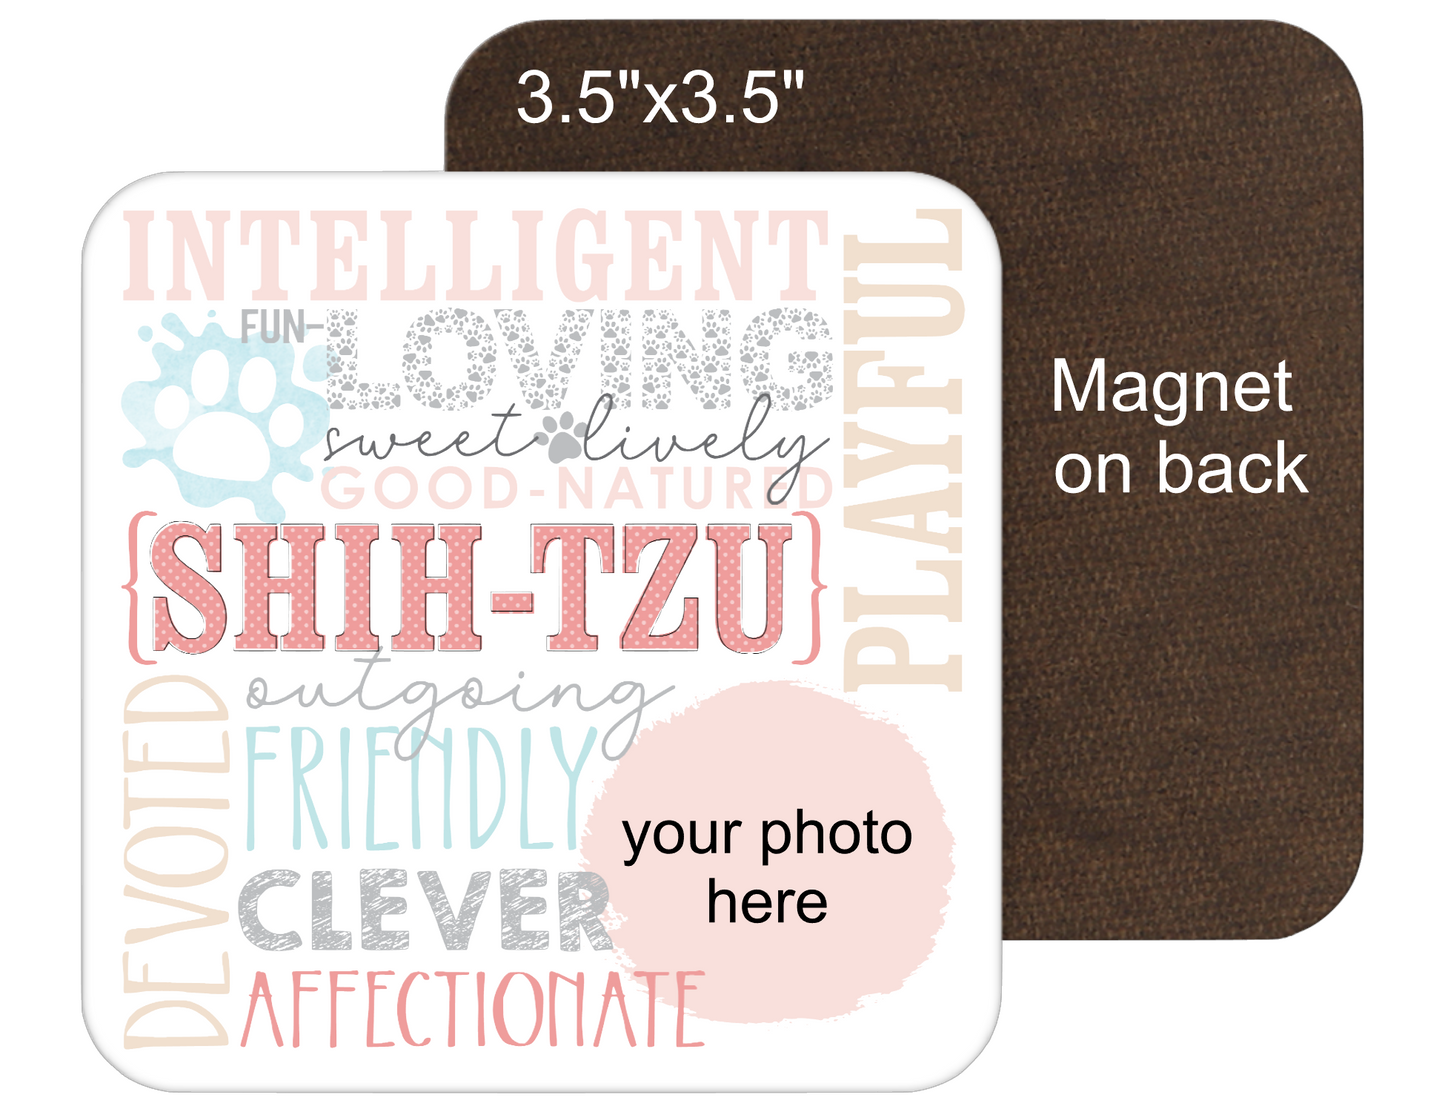 Shih-Tzu Personalized 6" Sign or 3.5" Fridge Magnet